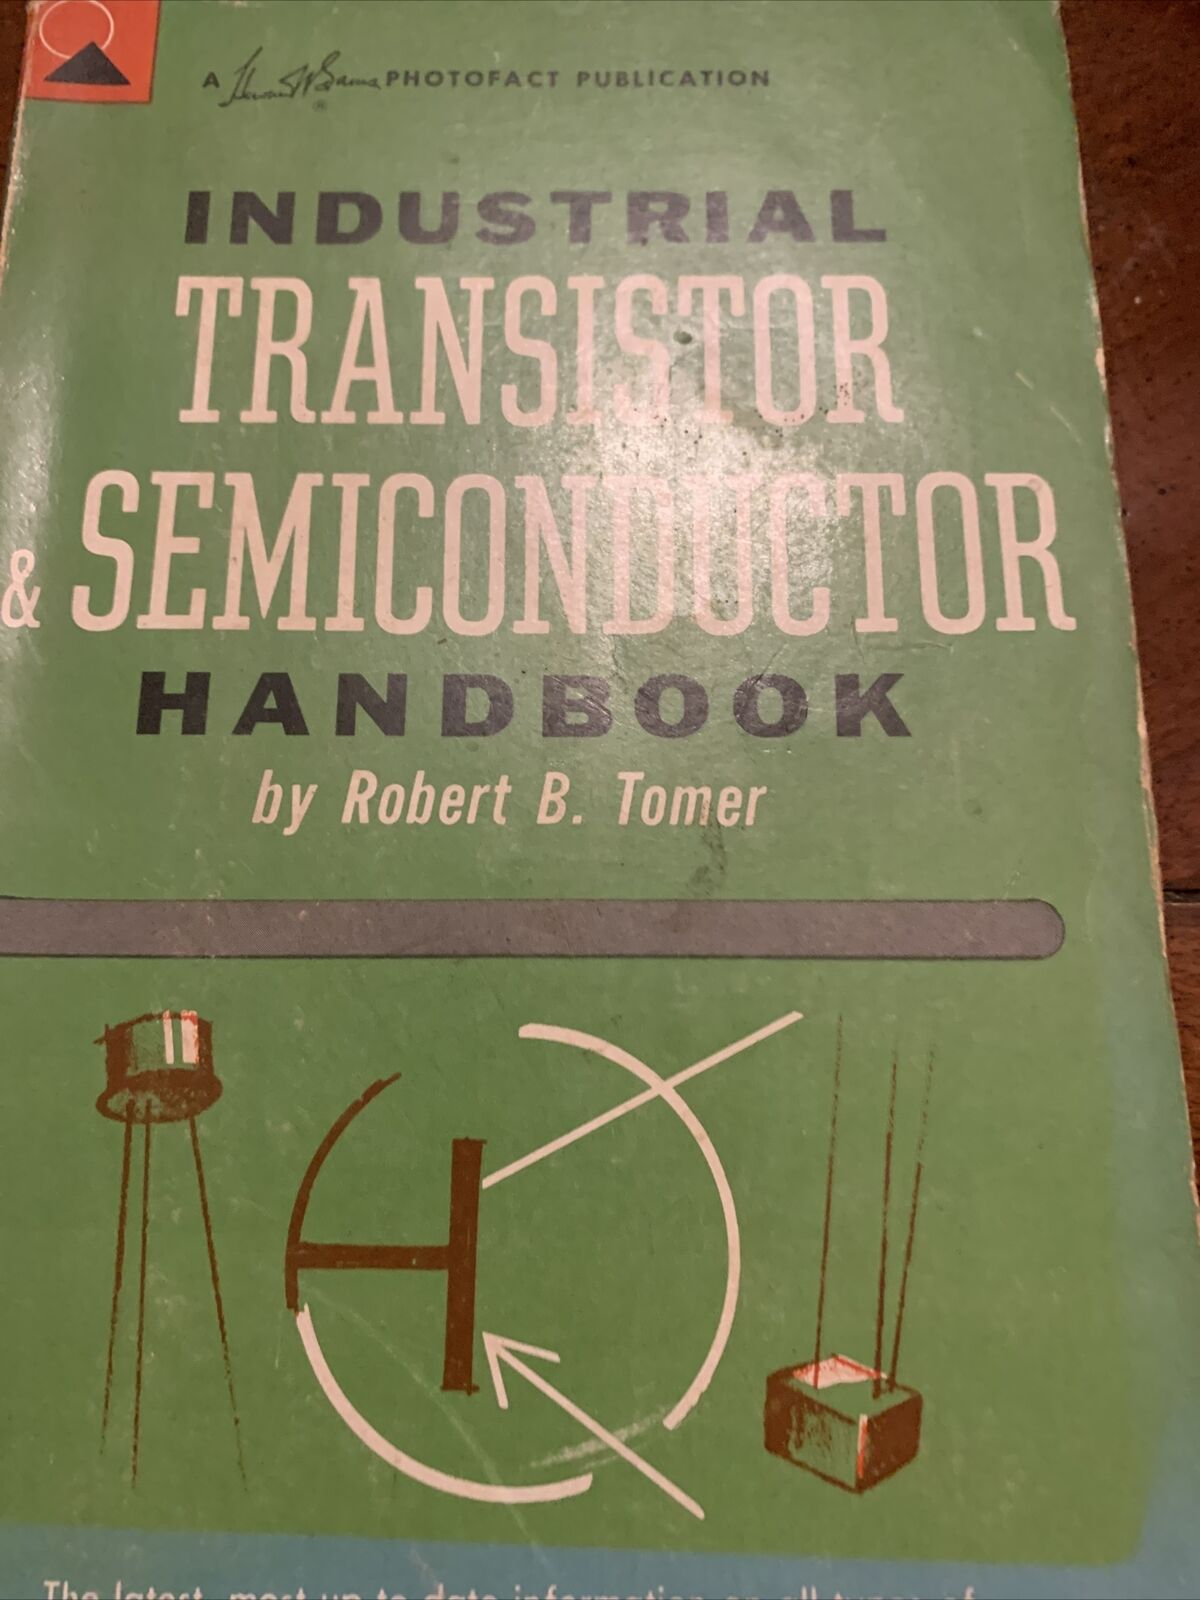 Industrial Transistor Semiconductor Handbook Robert Tomer 1961 First Edition